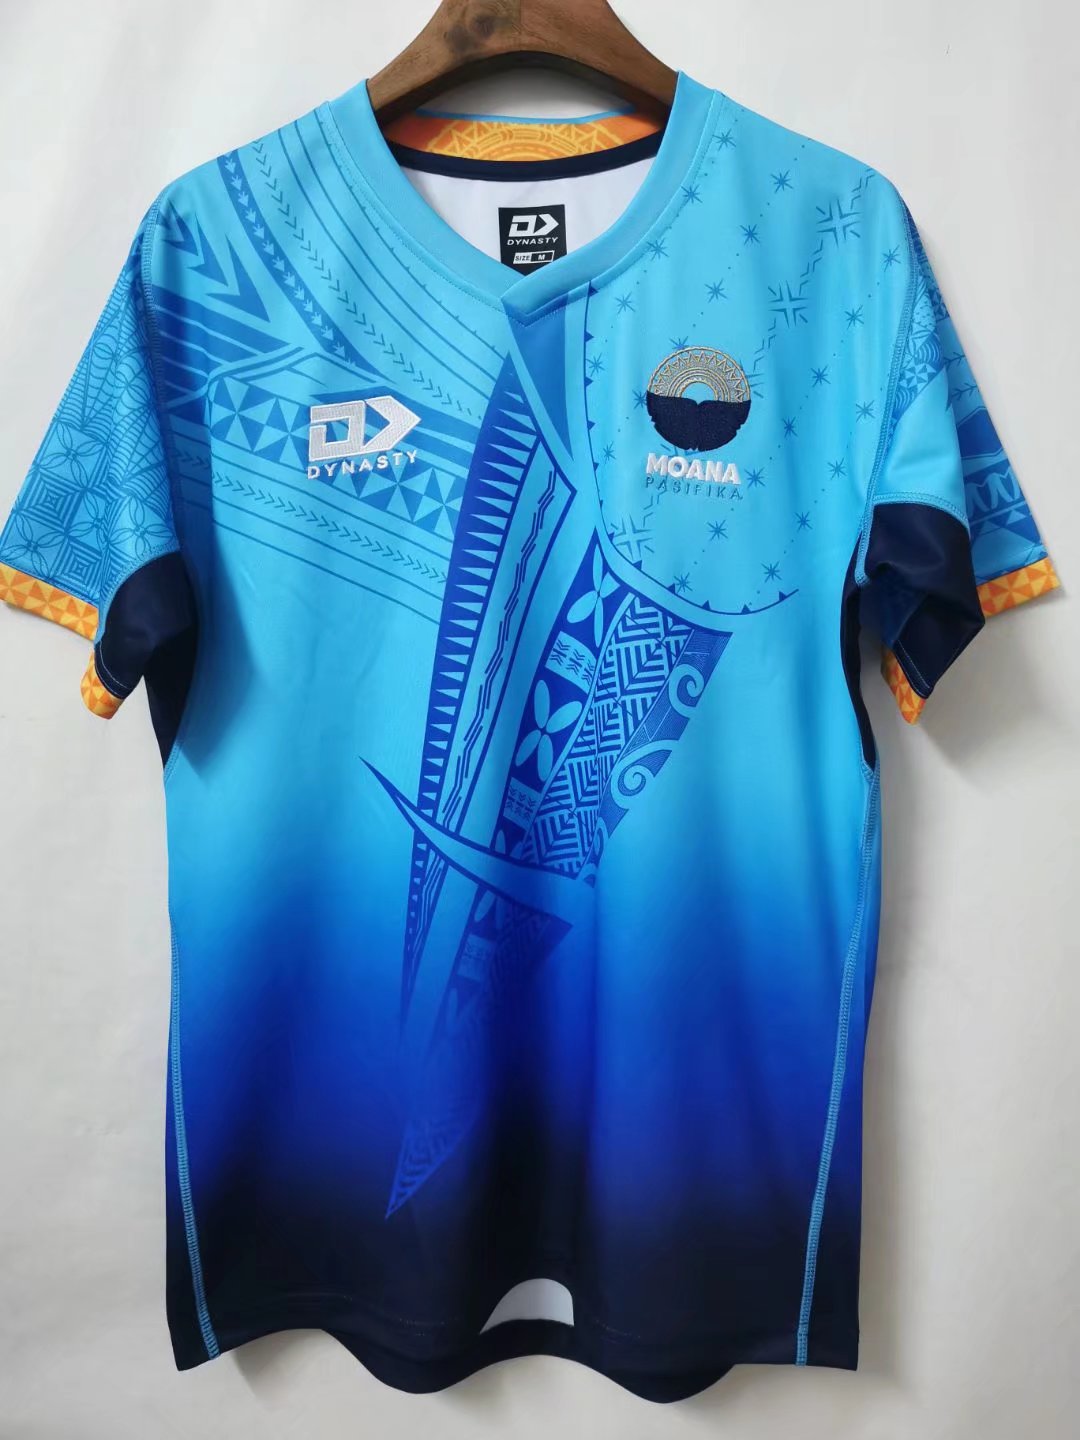 2021/22 New Zealand Moana Blue Thailand Rugby Shirts-805